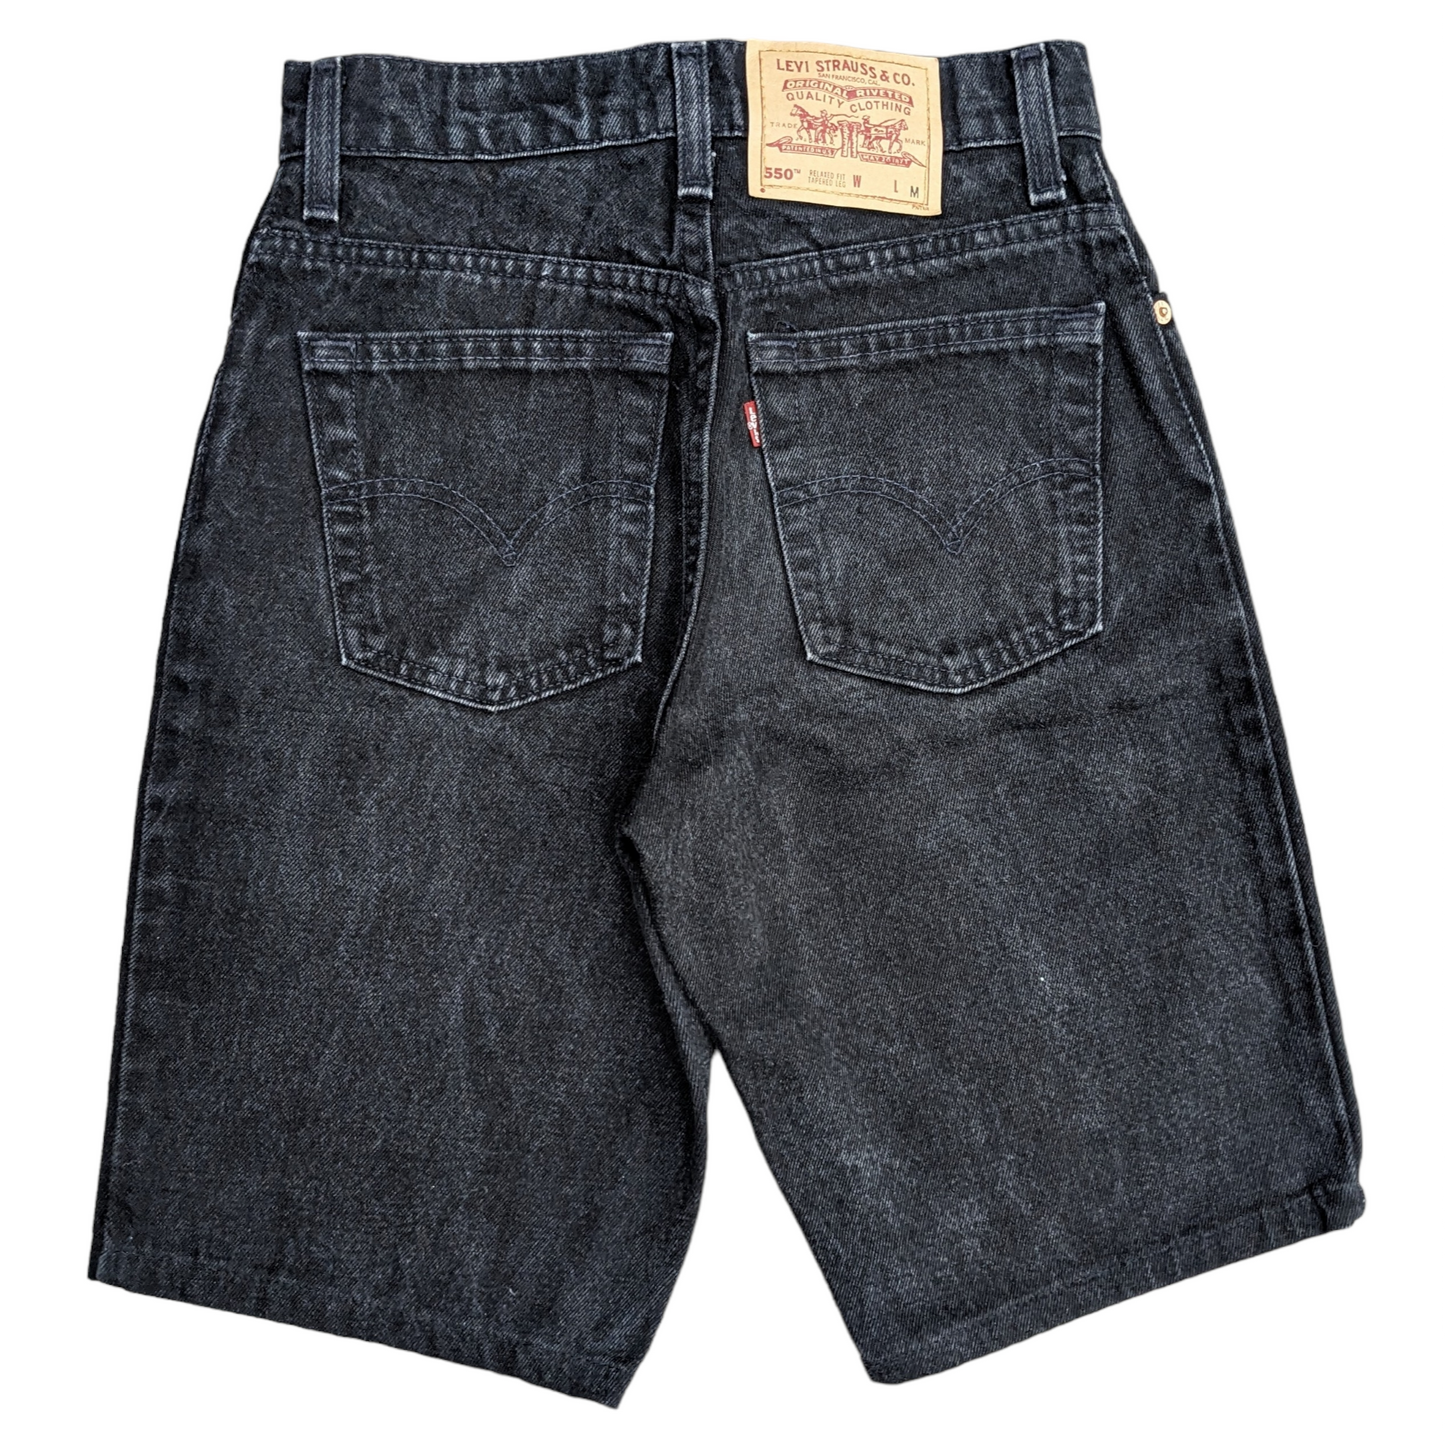 90's Levi’s 550 Jean Shorts Size UK 8